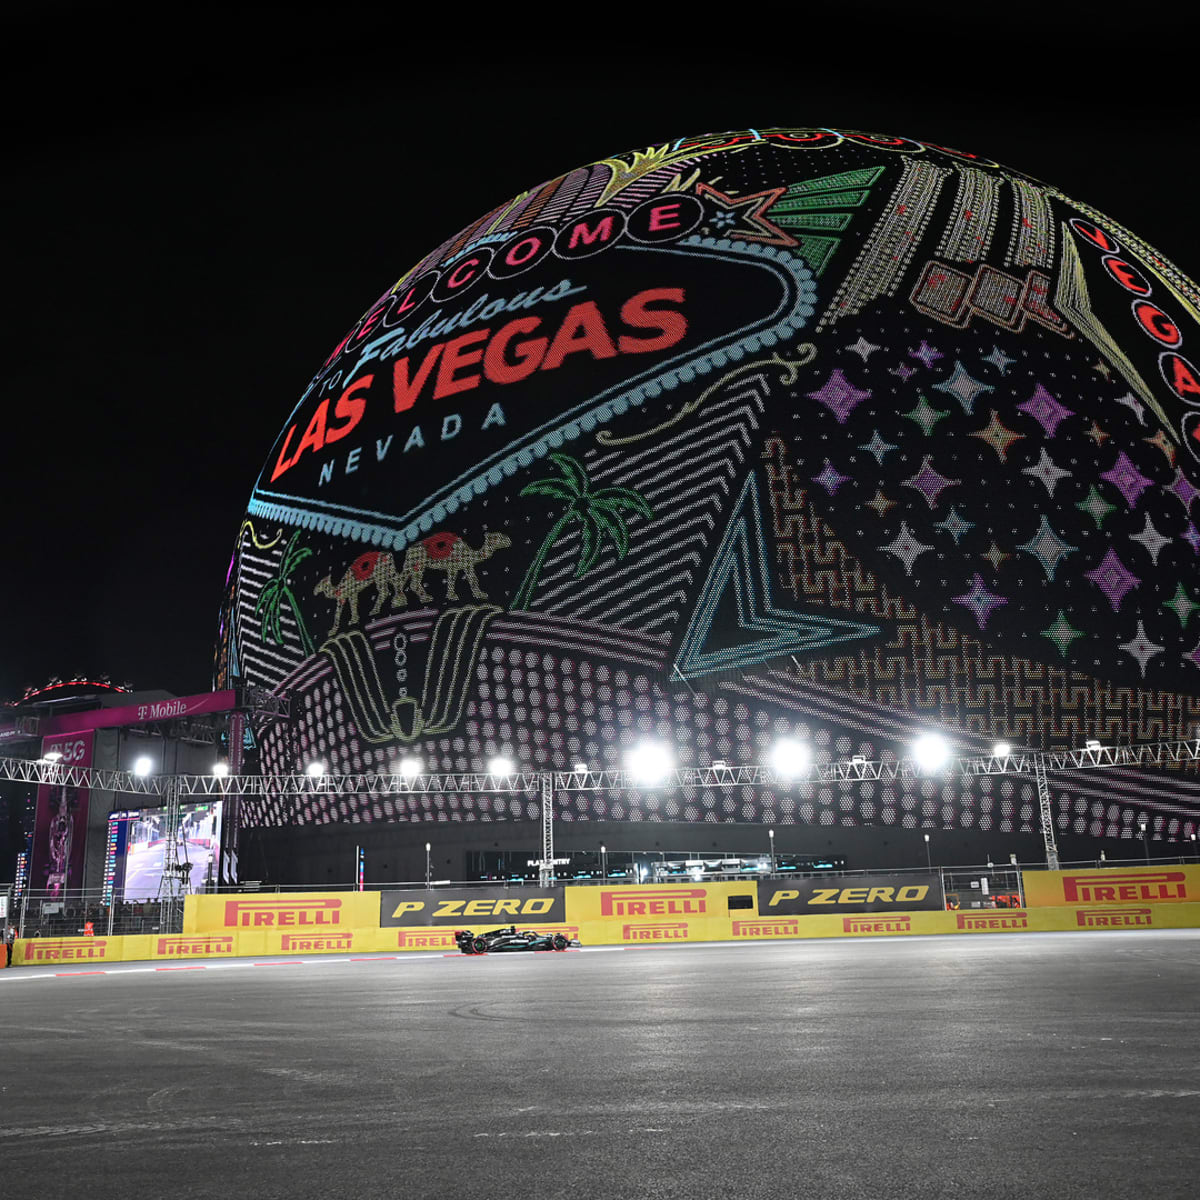 Formula 1's Las Vegas GP chaos creates fervor across Twitter